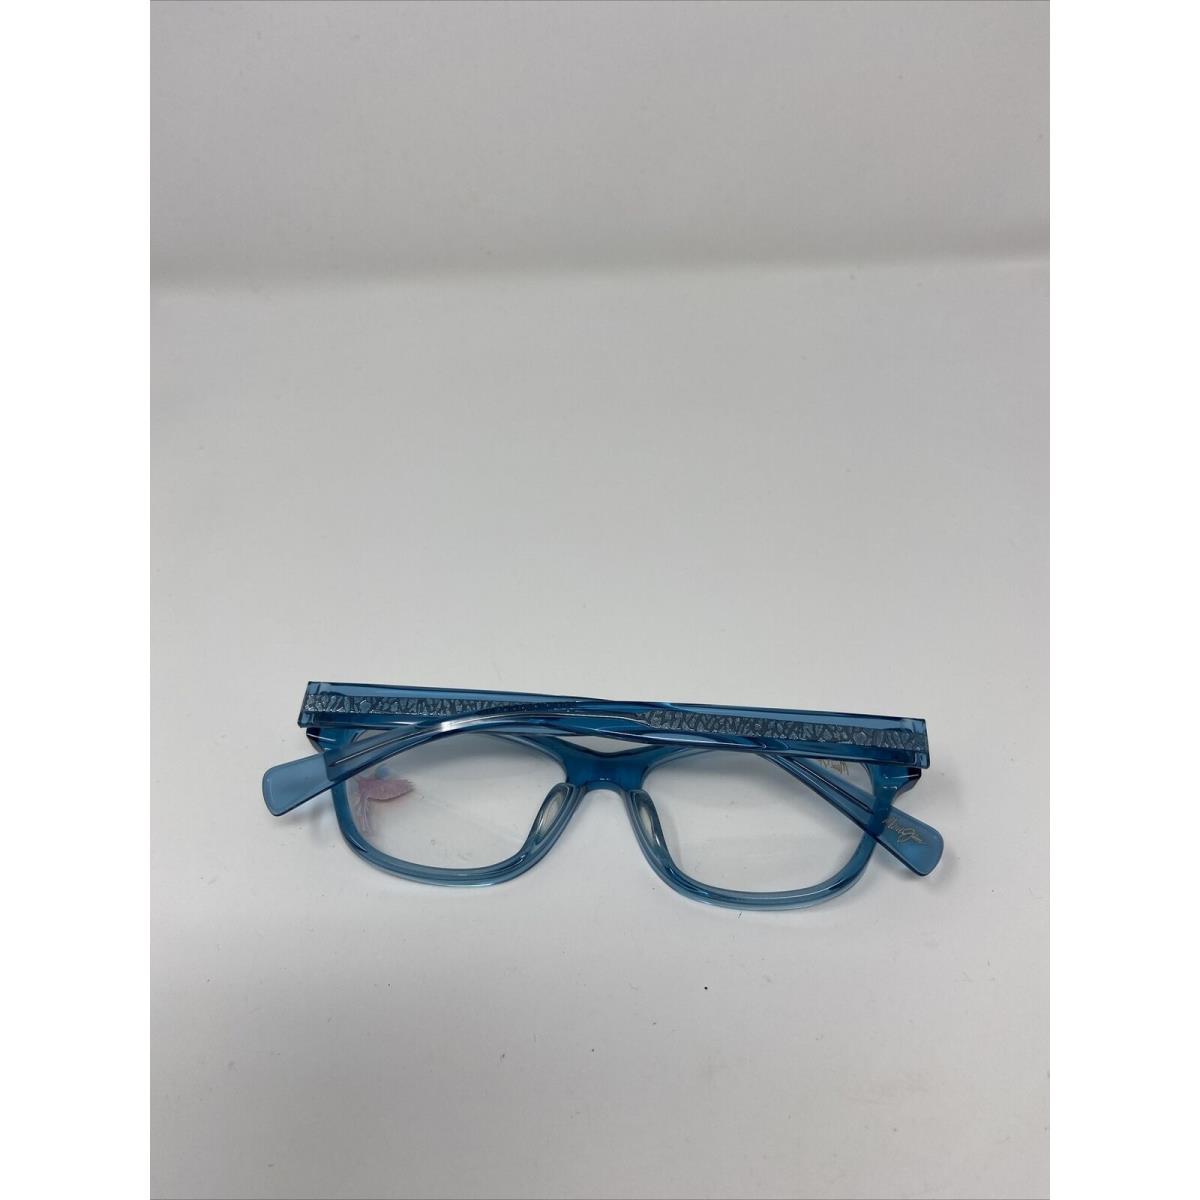 Maui Jim eyeglasses  - Blue Frame 7